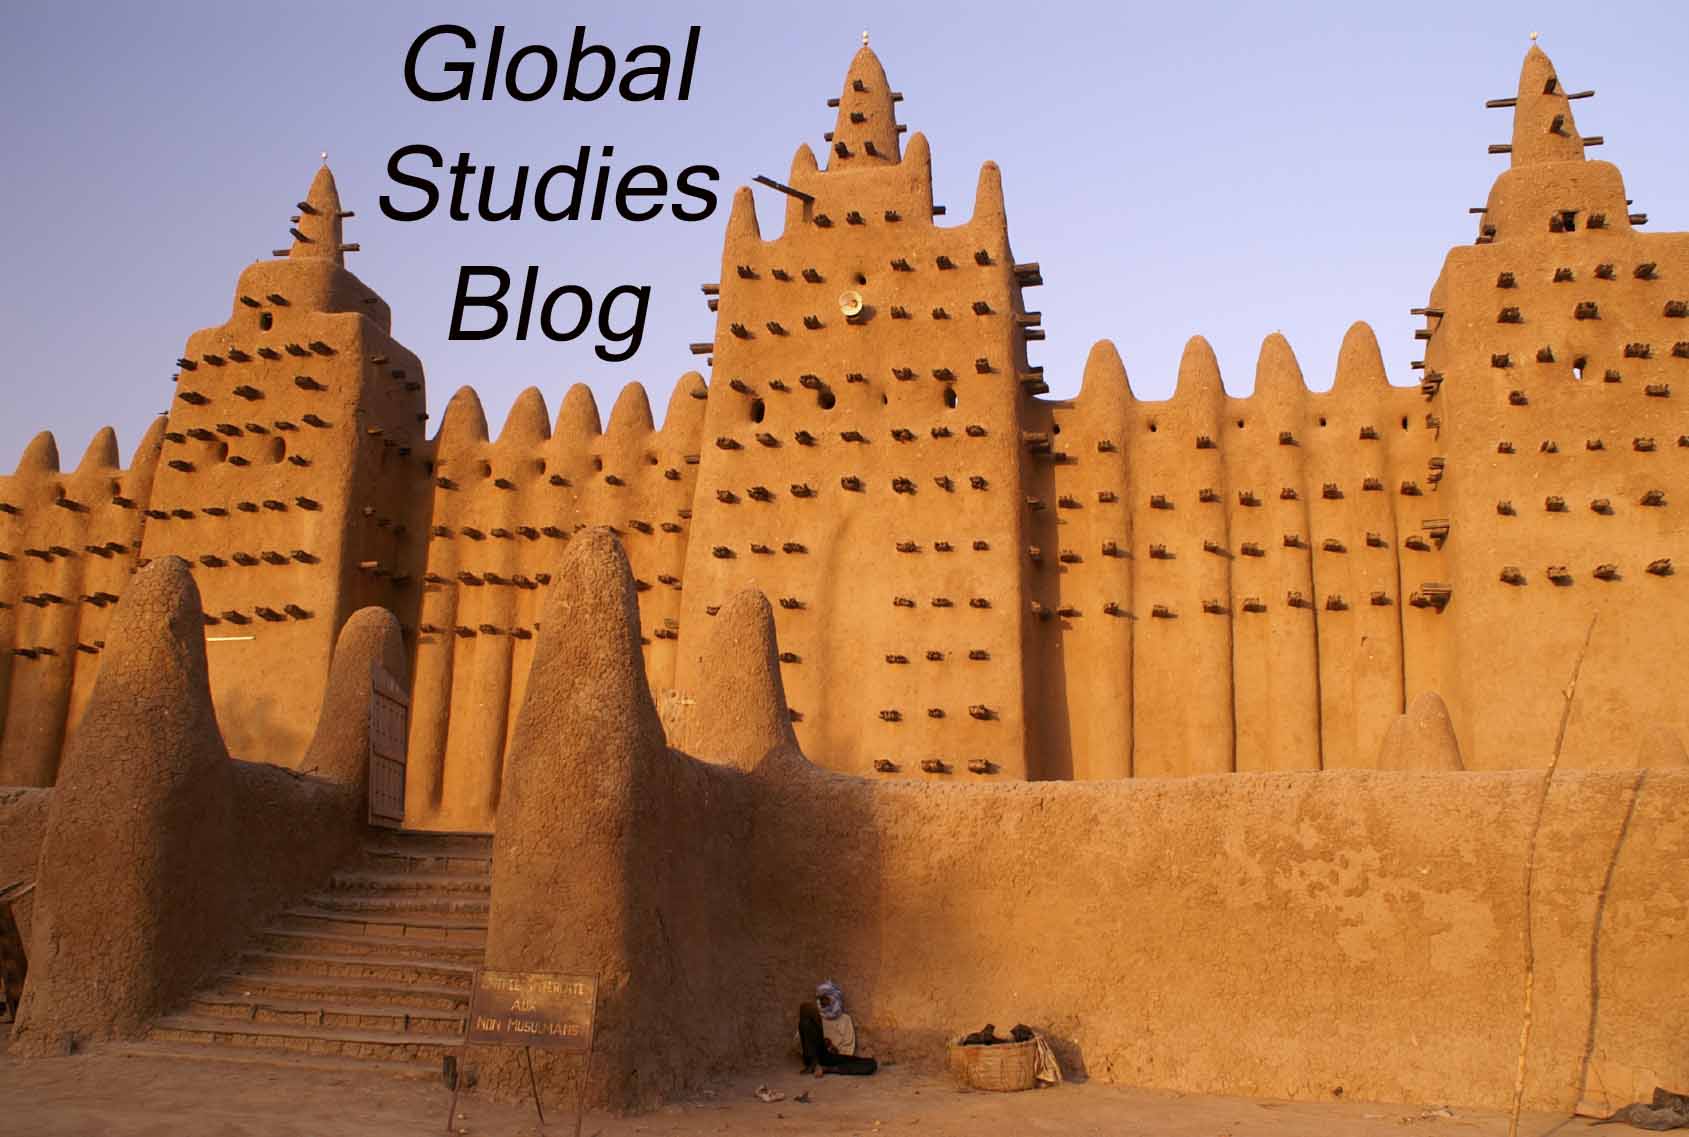 Global Studies Blog